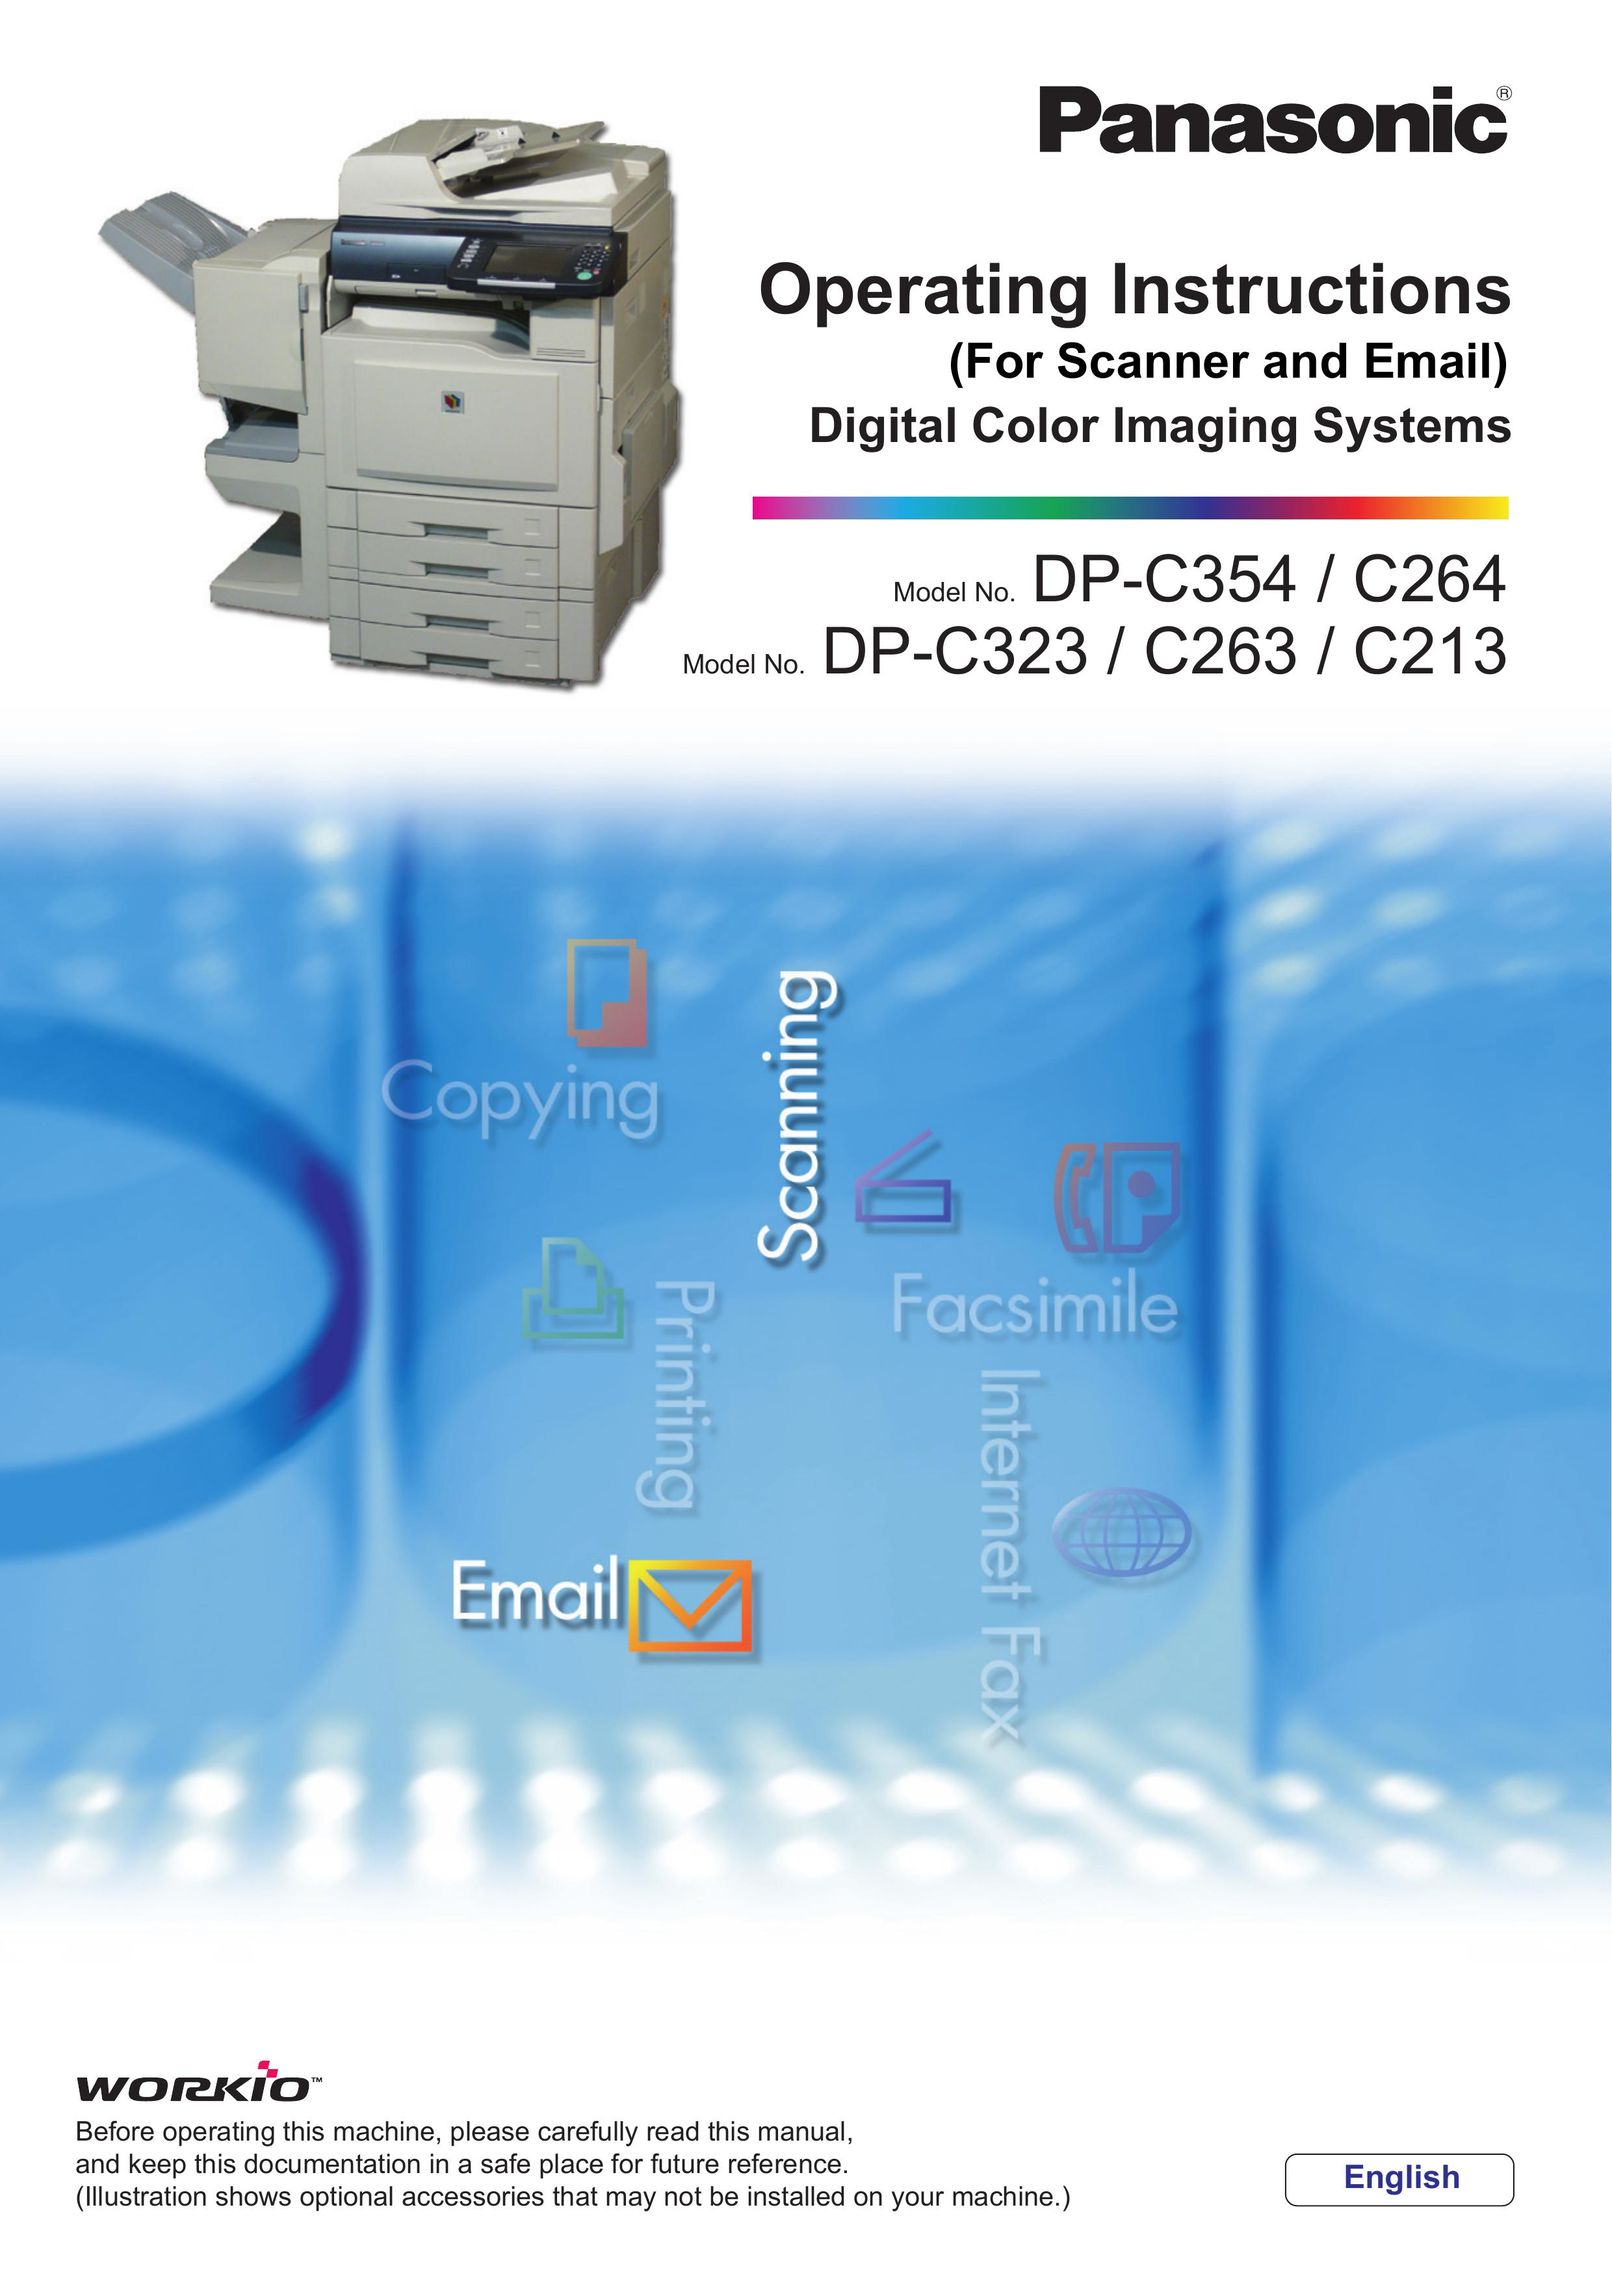 Panasonic C263 Scanner User Manual